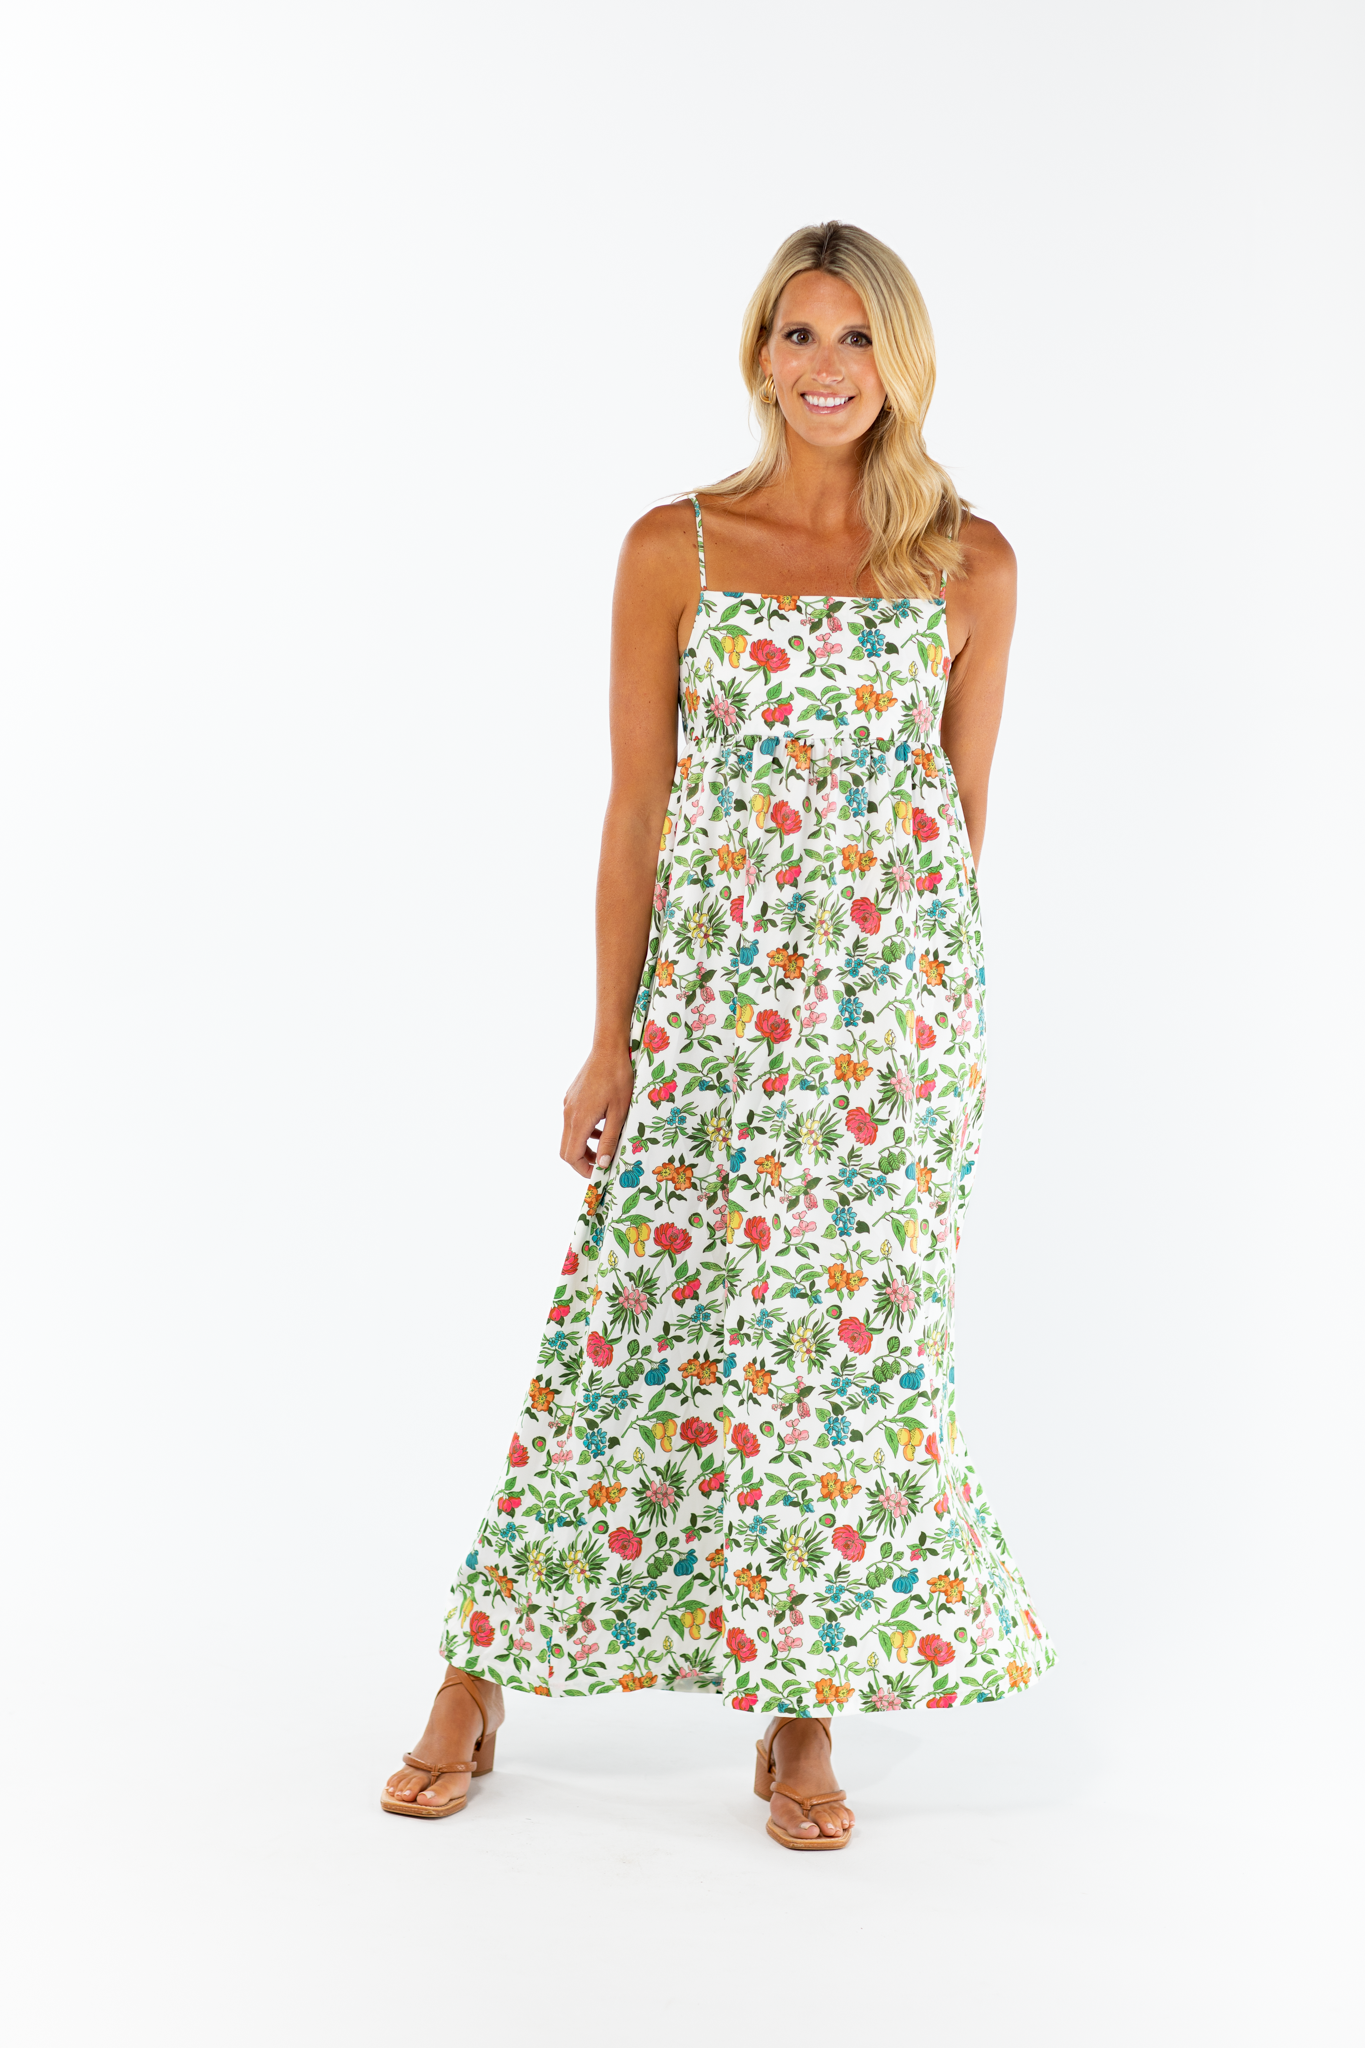 The Cleobella Dress - Sorrento Succulent